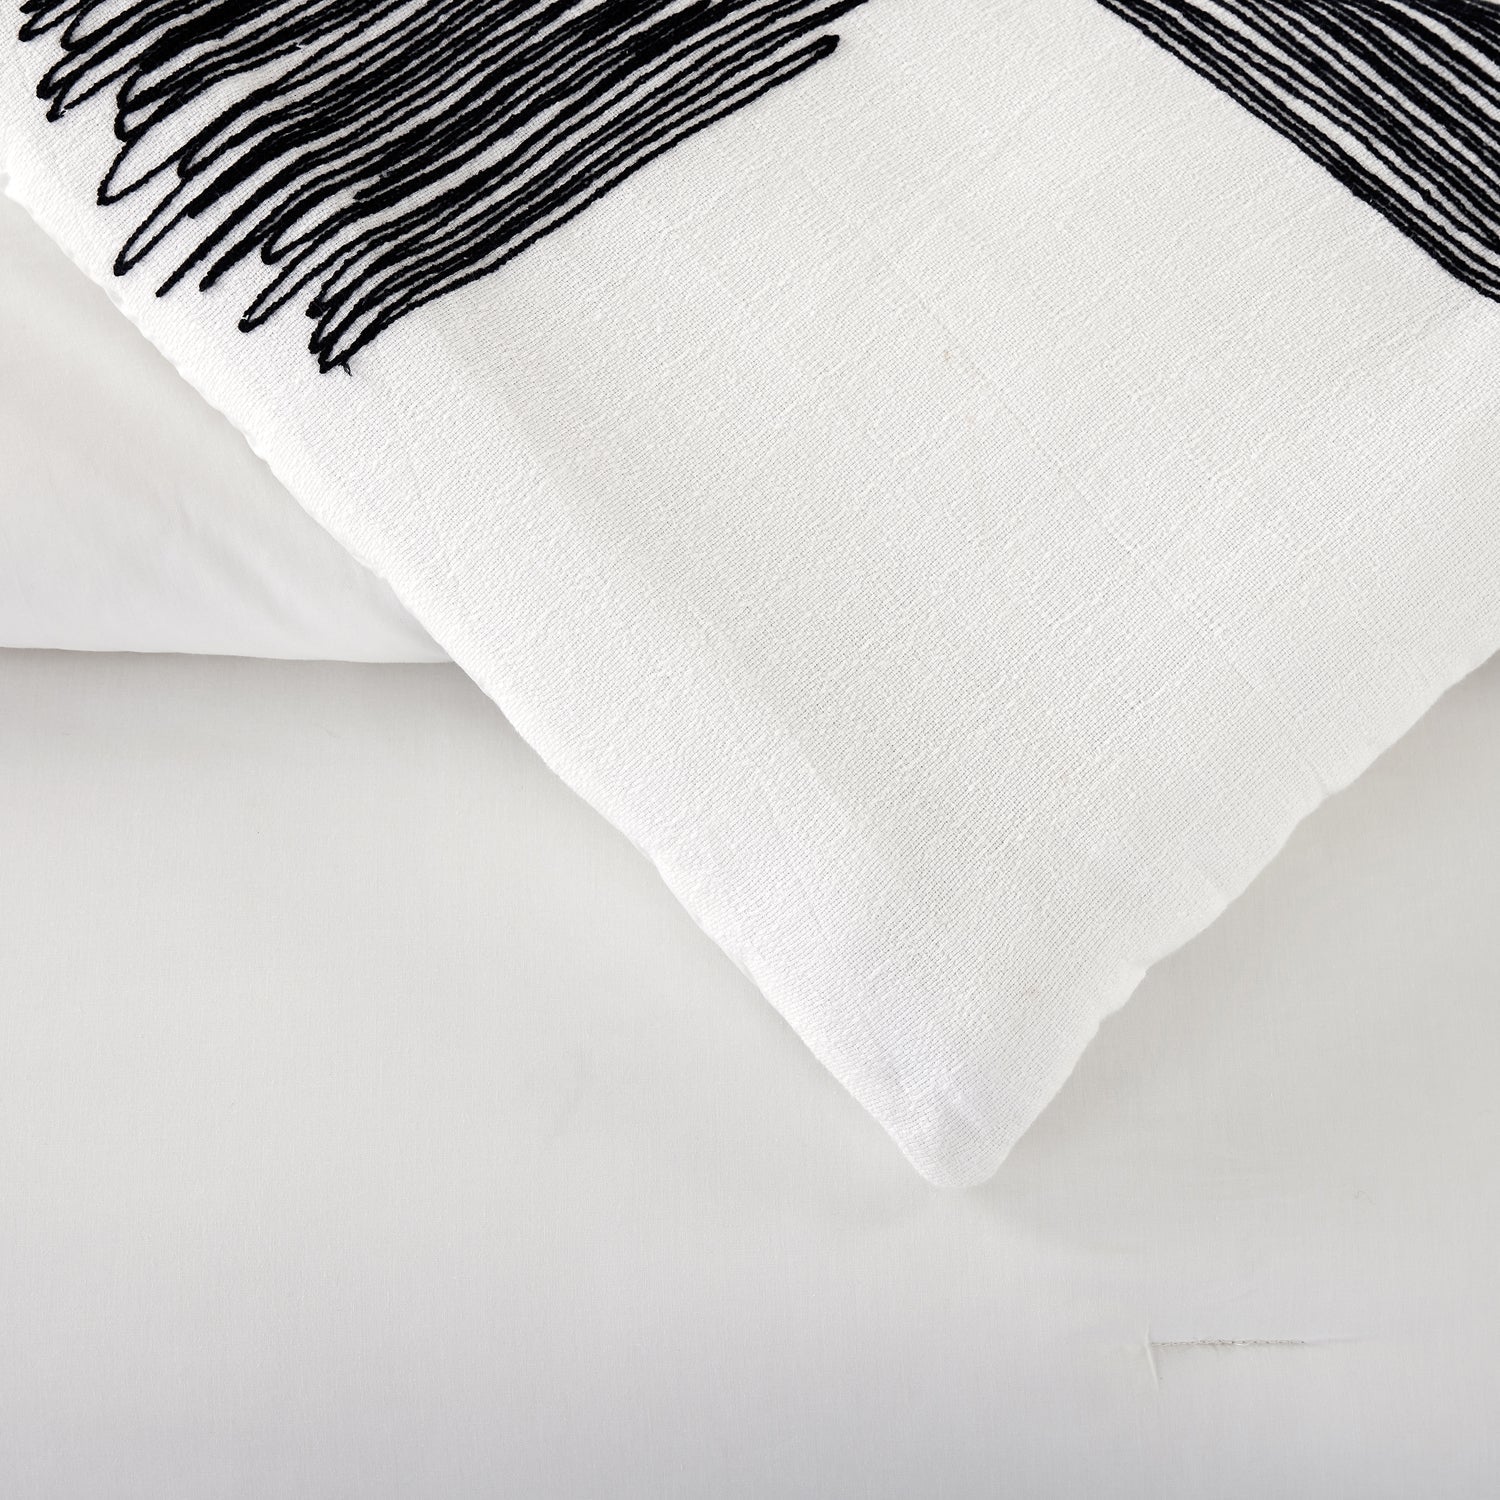 Sleepnight set drap de lit blanc coton LP517407